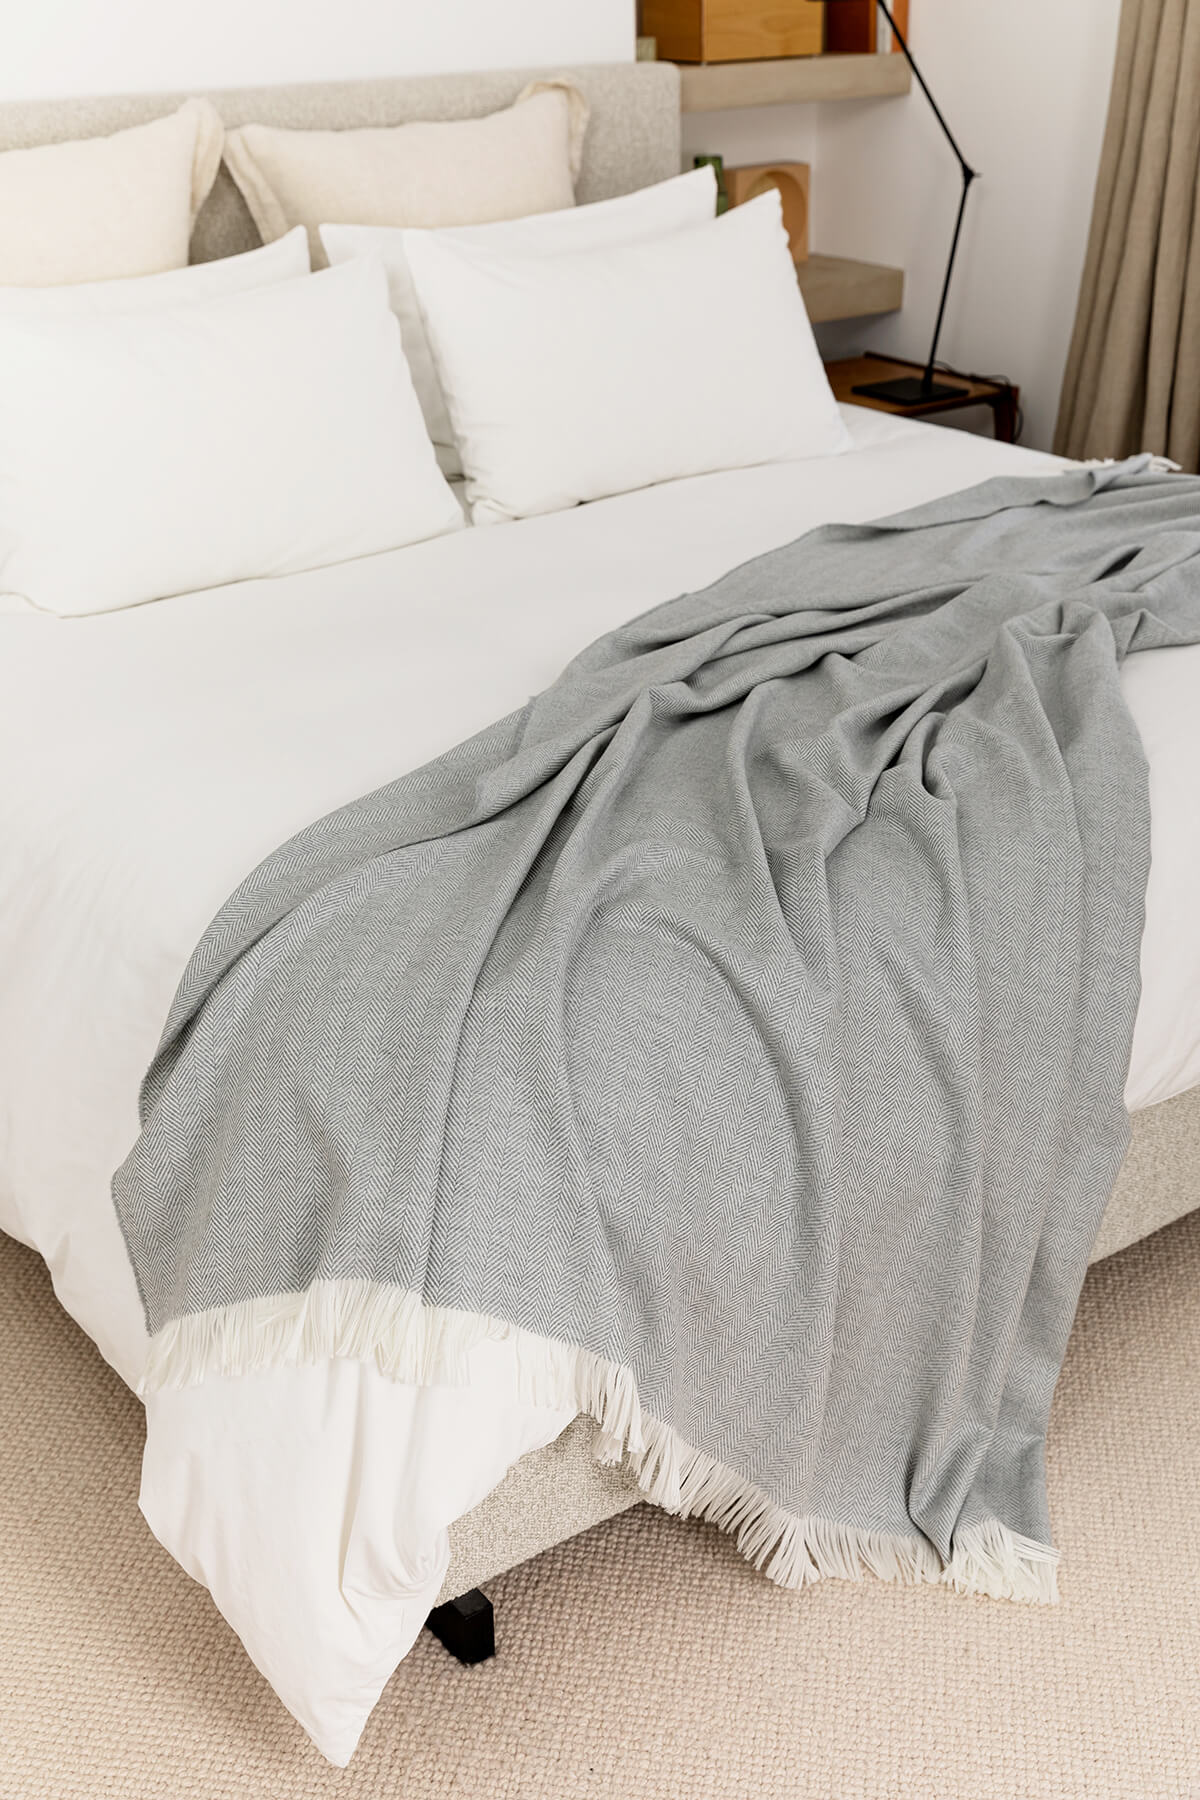 Johnstons of Elgin’s Herringbone Merino Bed Throw in Silver Birch & White on bed in neutral bedroom WD001115RU5857ONE